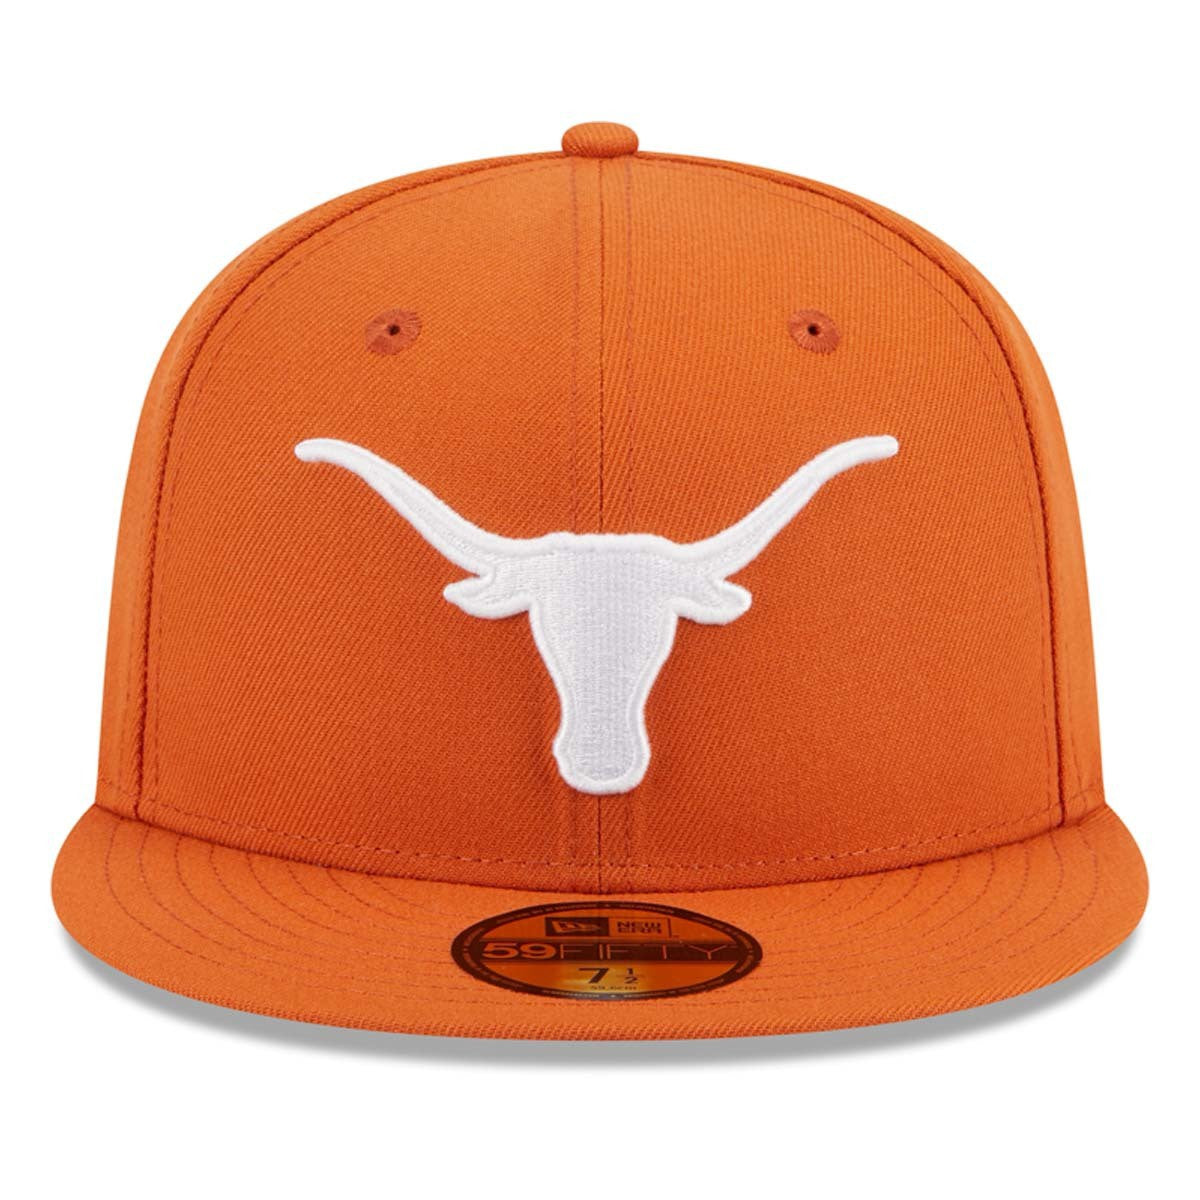 New Era Texas Longhorns Basic 59FIFTY Team Fitted Hat - Texas Orange